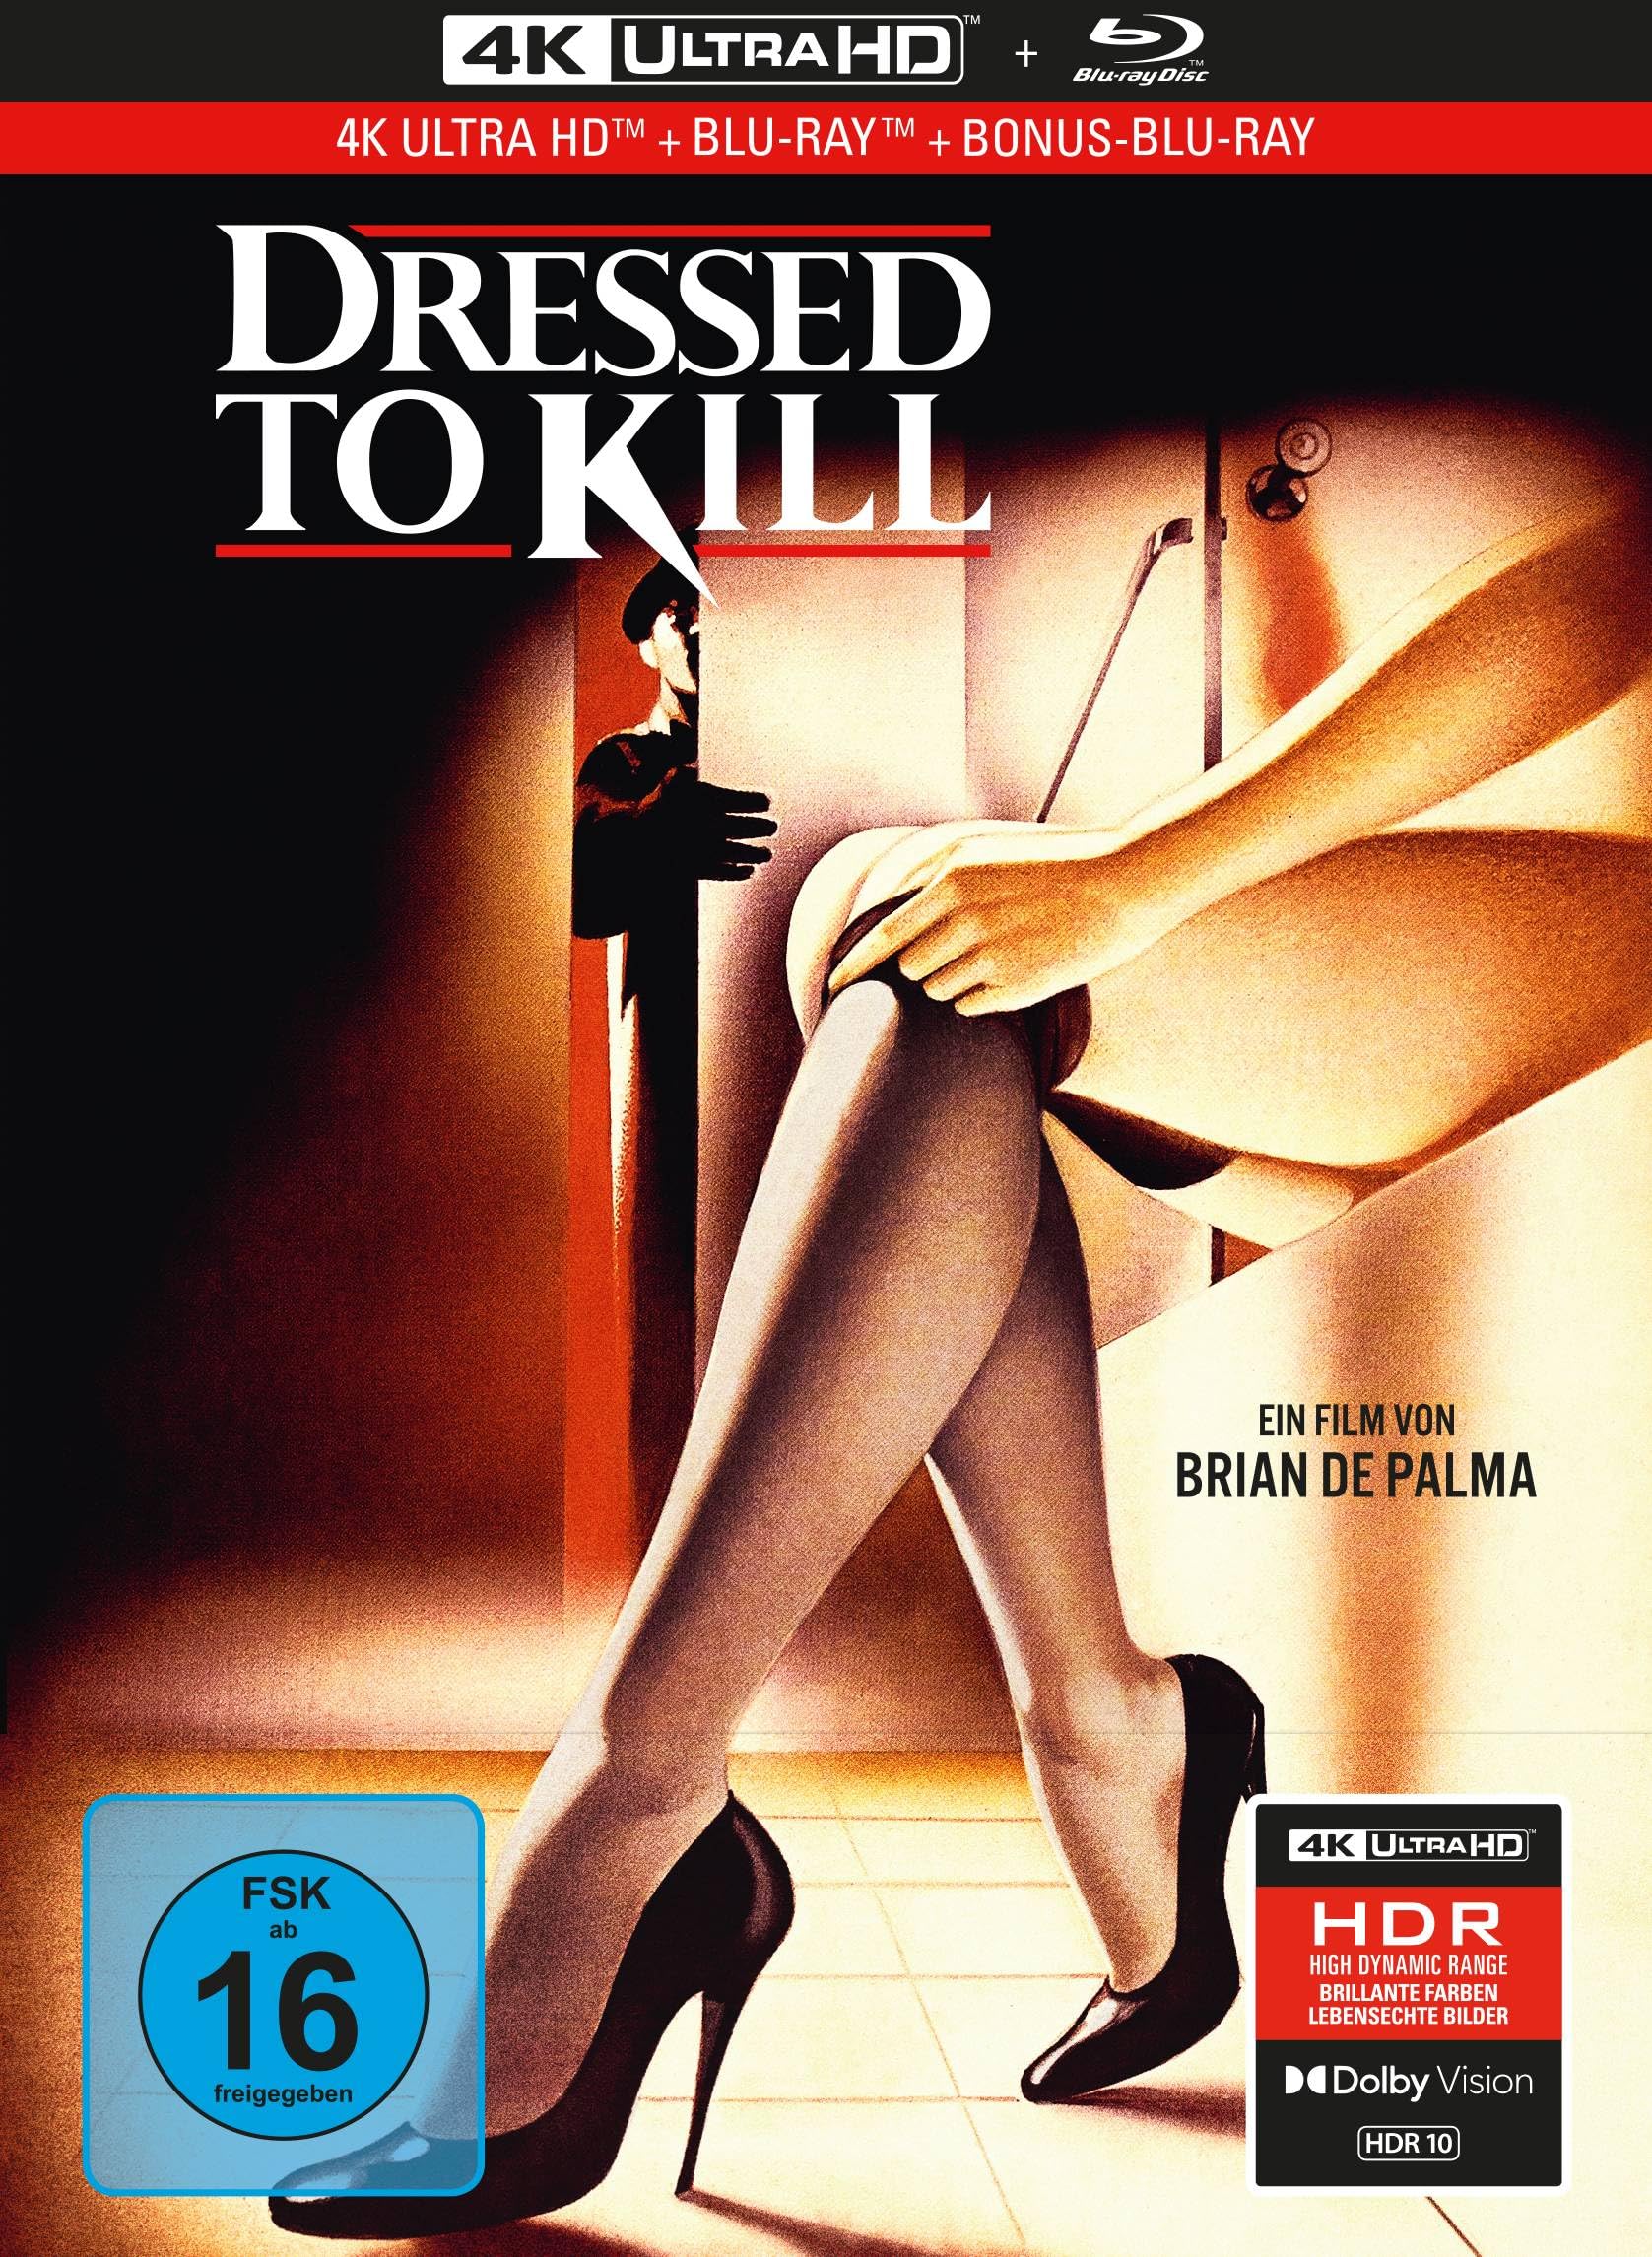 Dressed to Kill - 3-Disc Limited Collector's Edition im Mediabook (4K Ultra HD + Blu-ray + Bonus-Blu-ray)